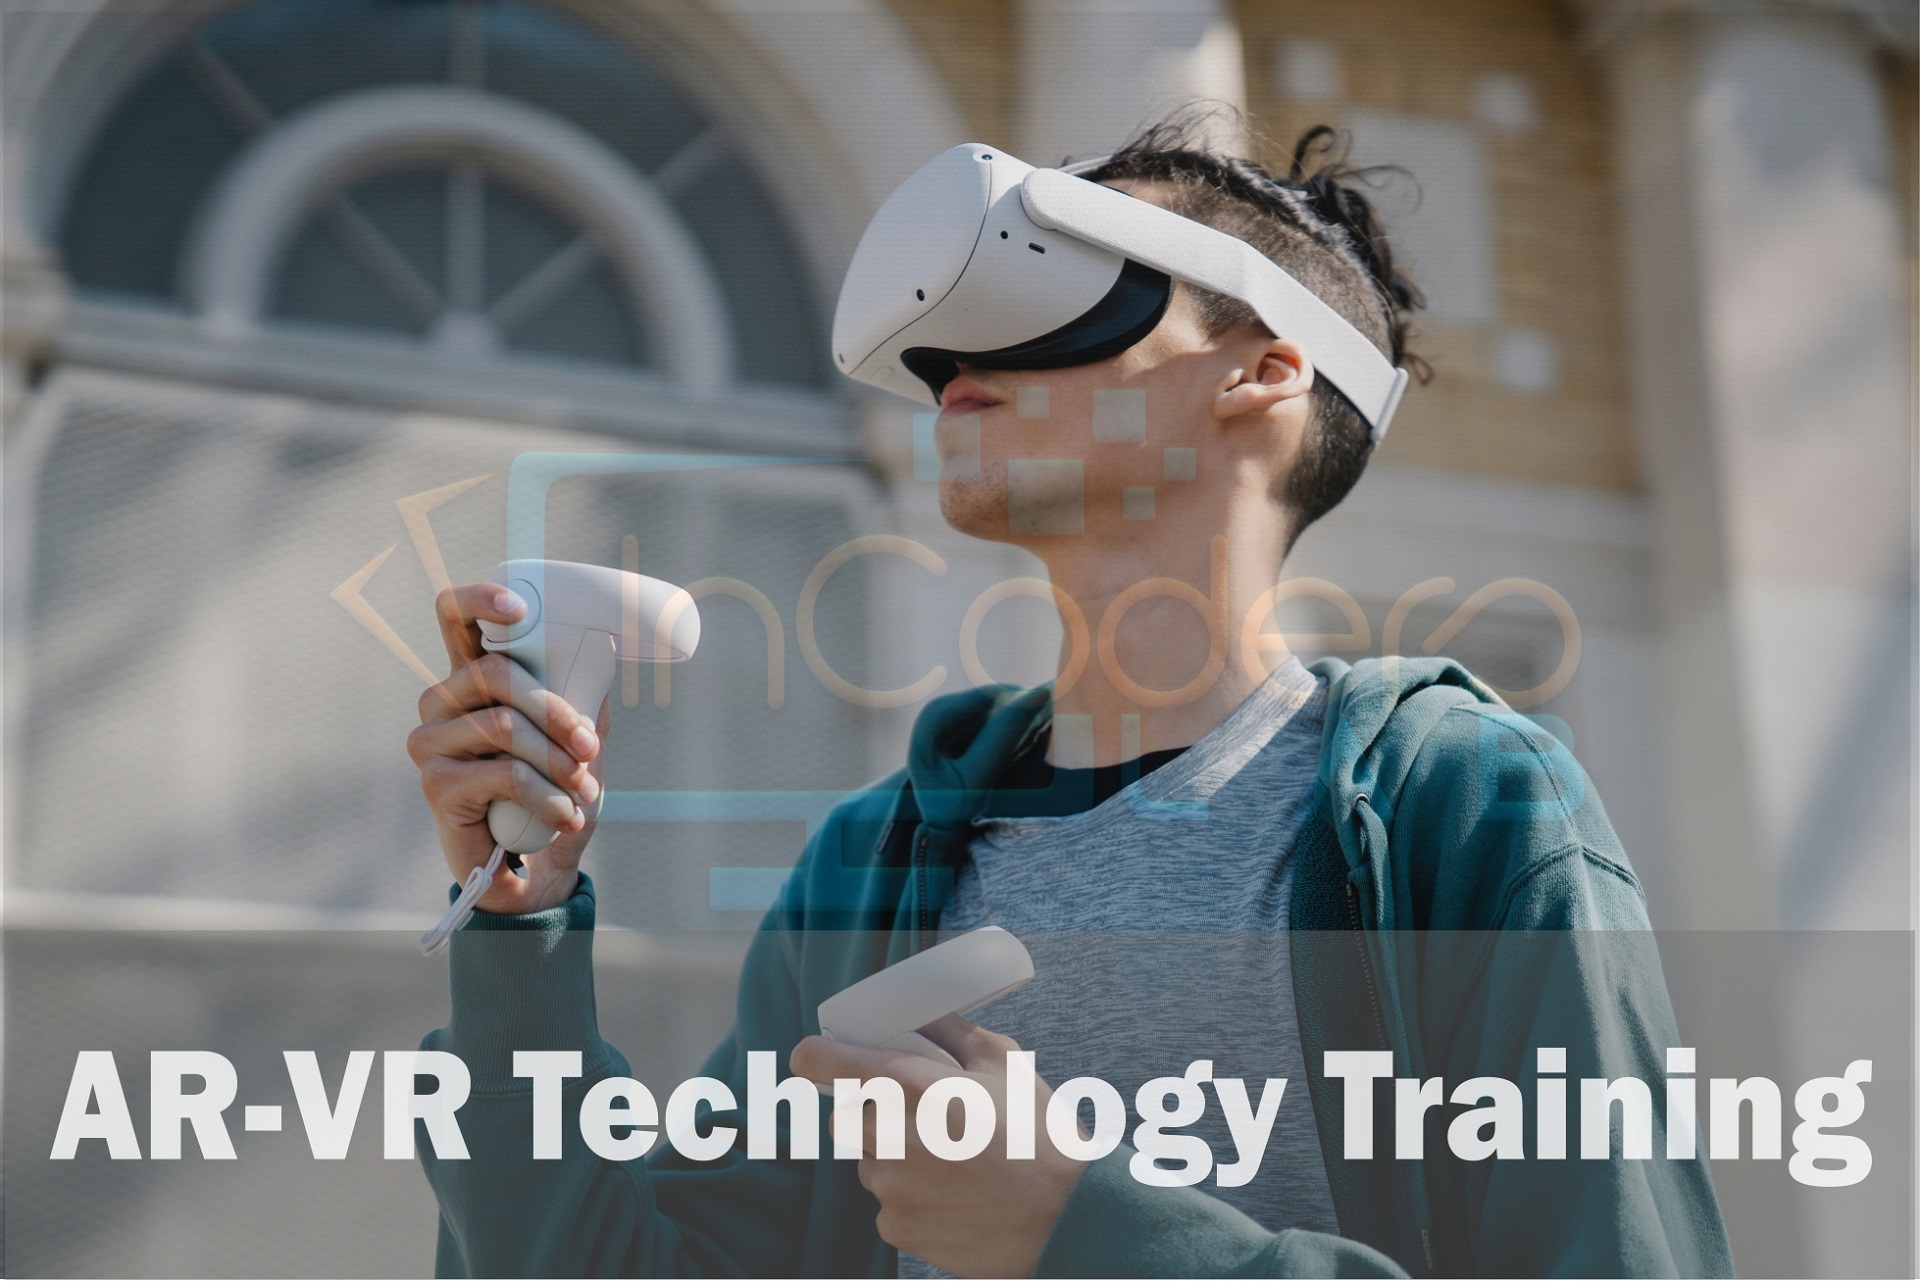 AR-VR Technology Training